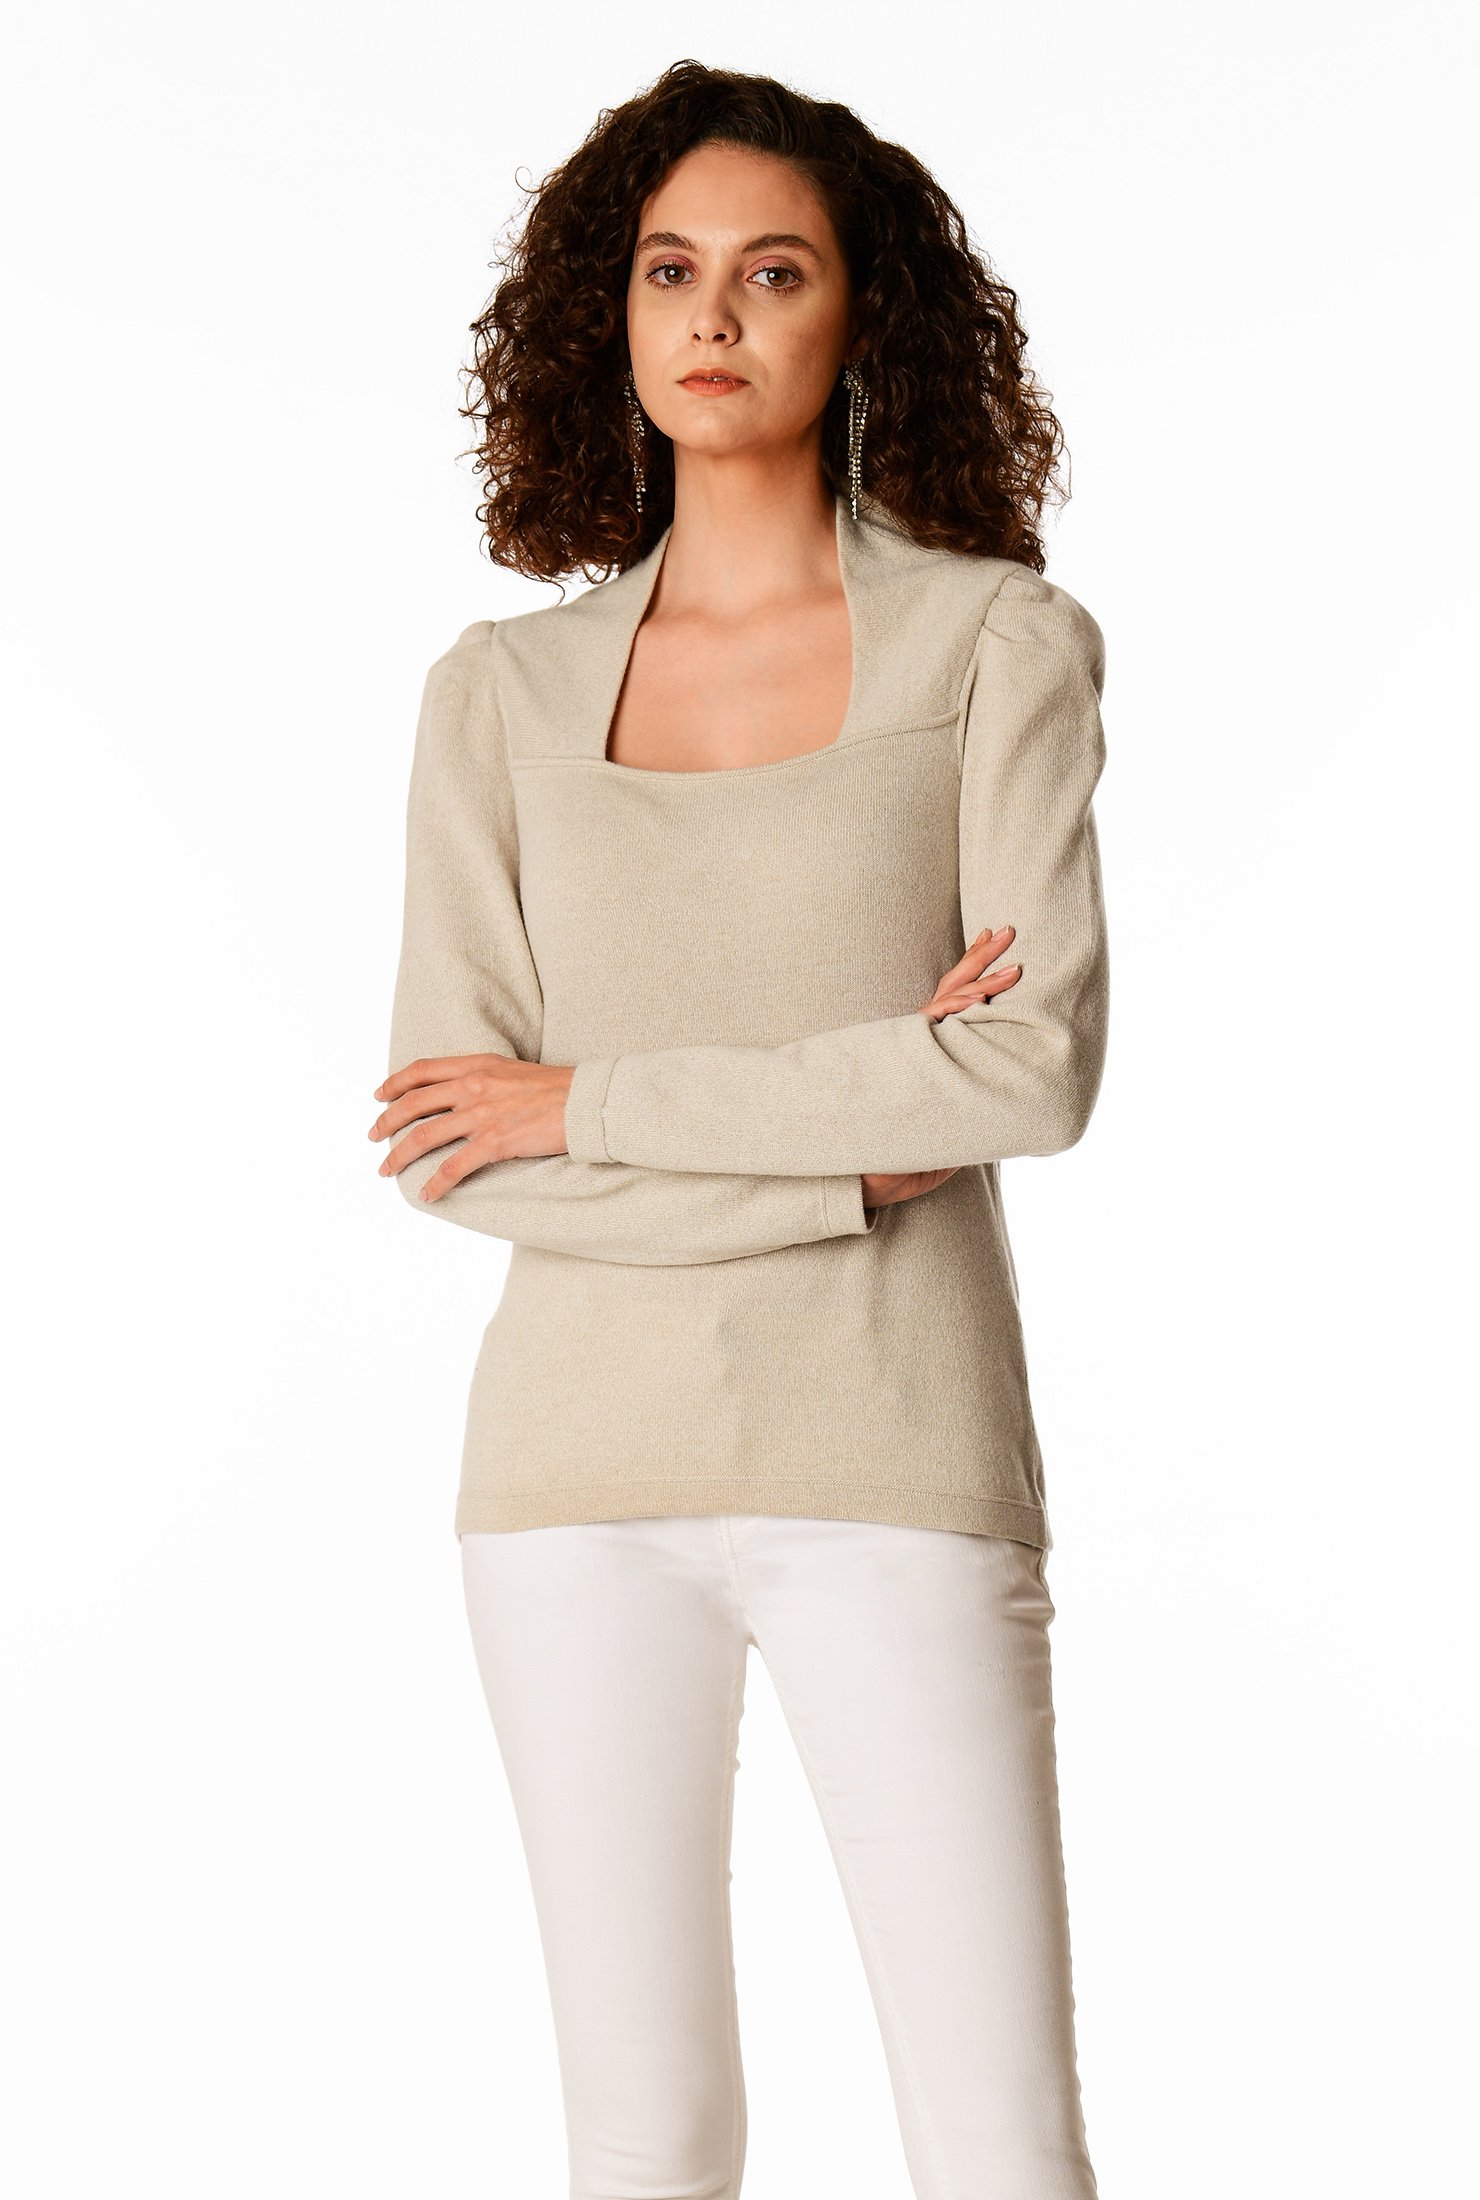 Shop Puff sleeve cashmere sweater | eShakti